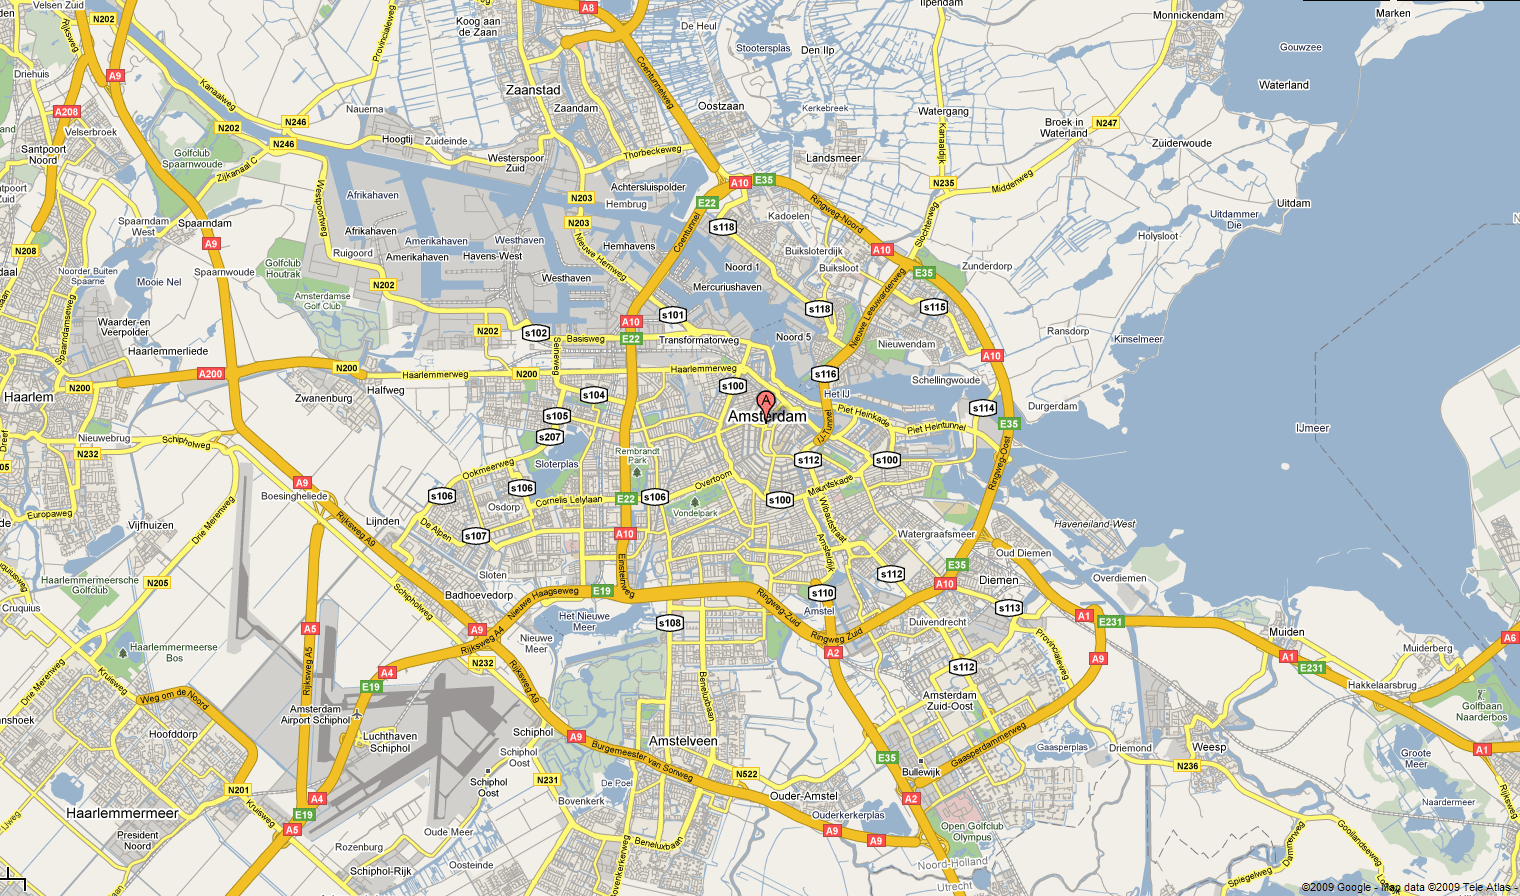 Amsterdam city center map